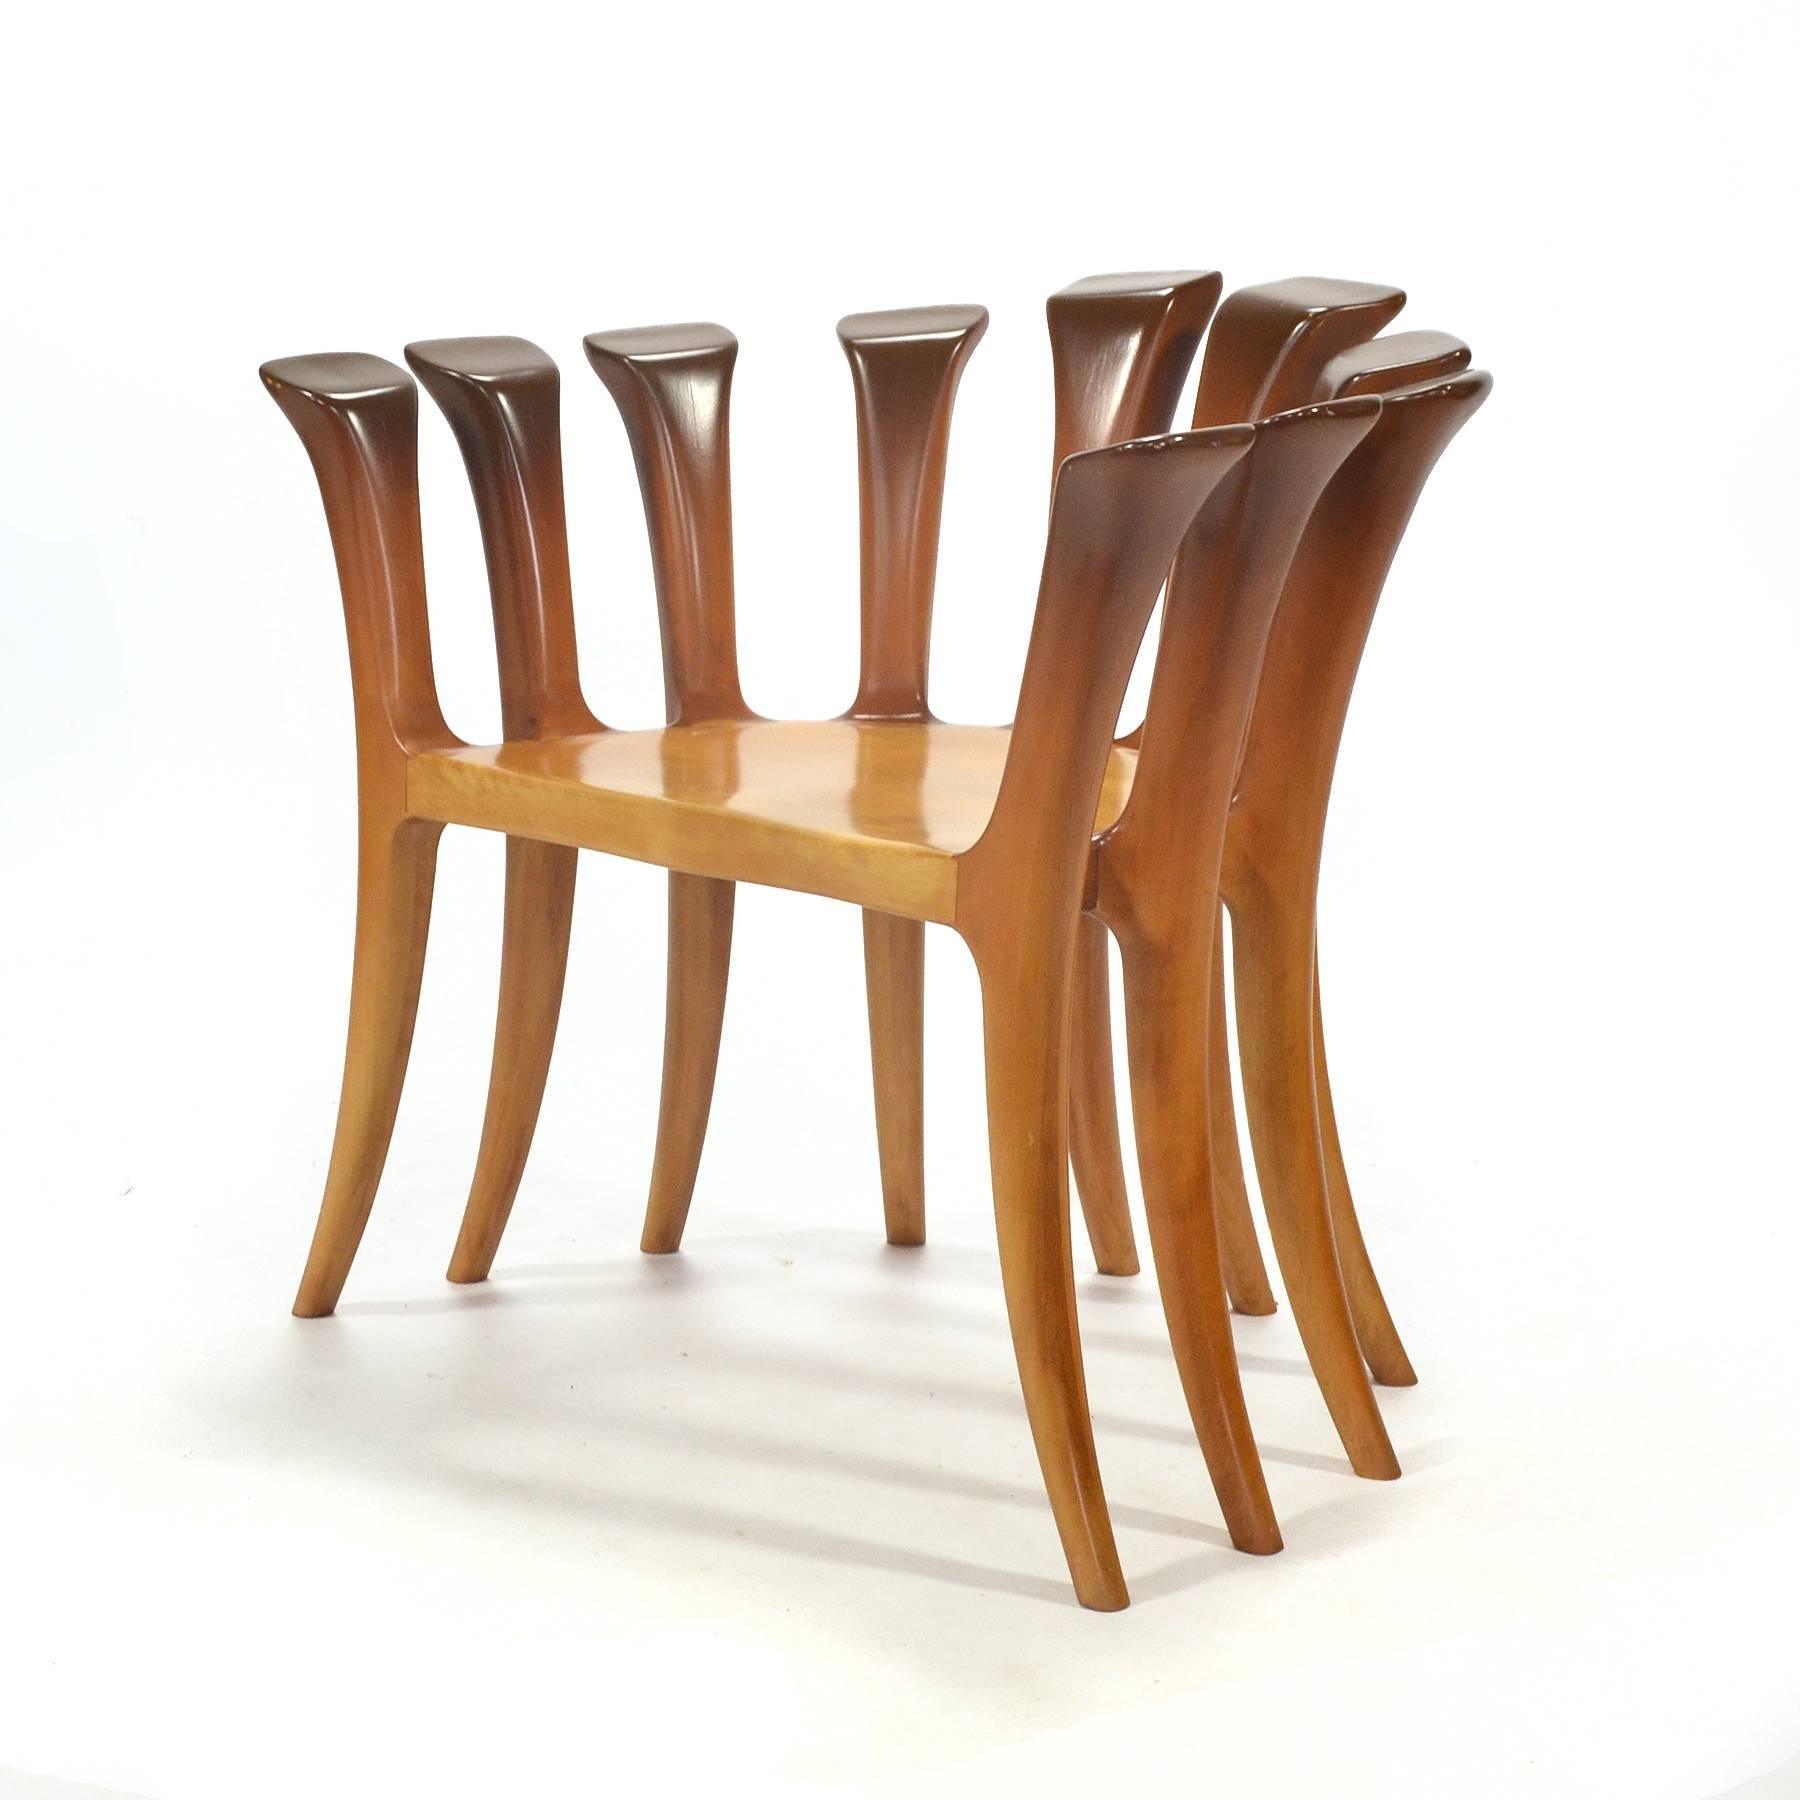 American Studio Craft Chair